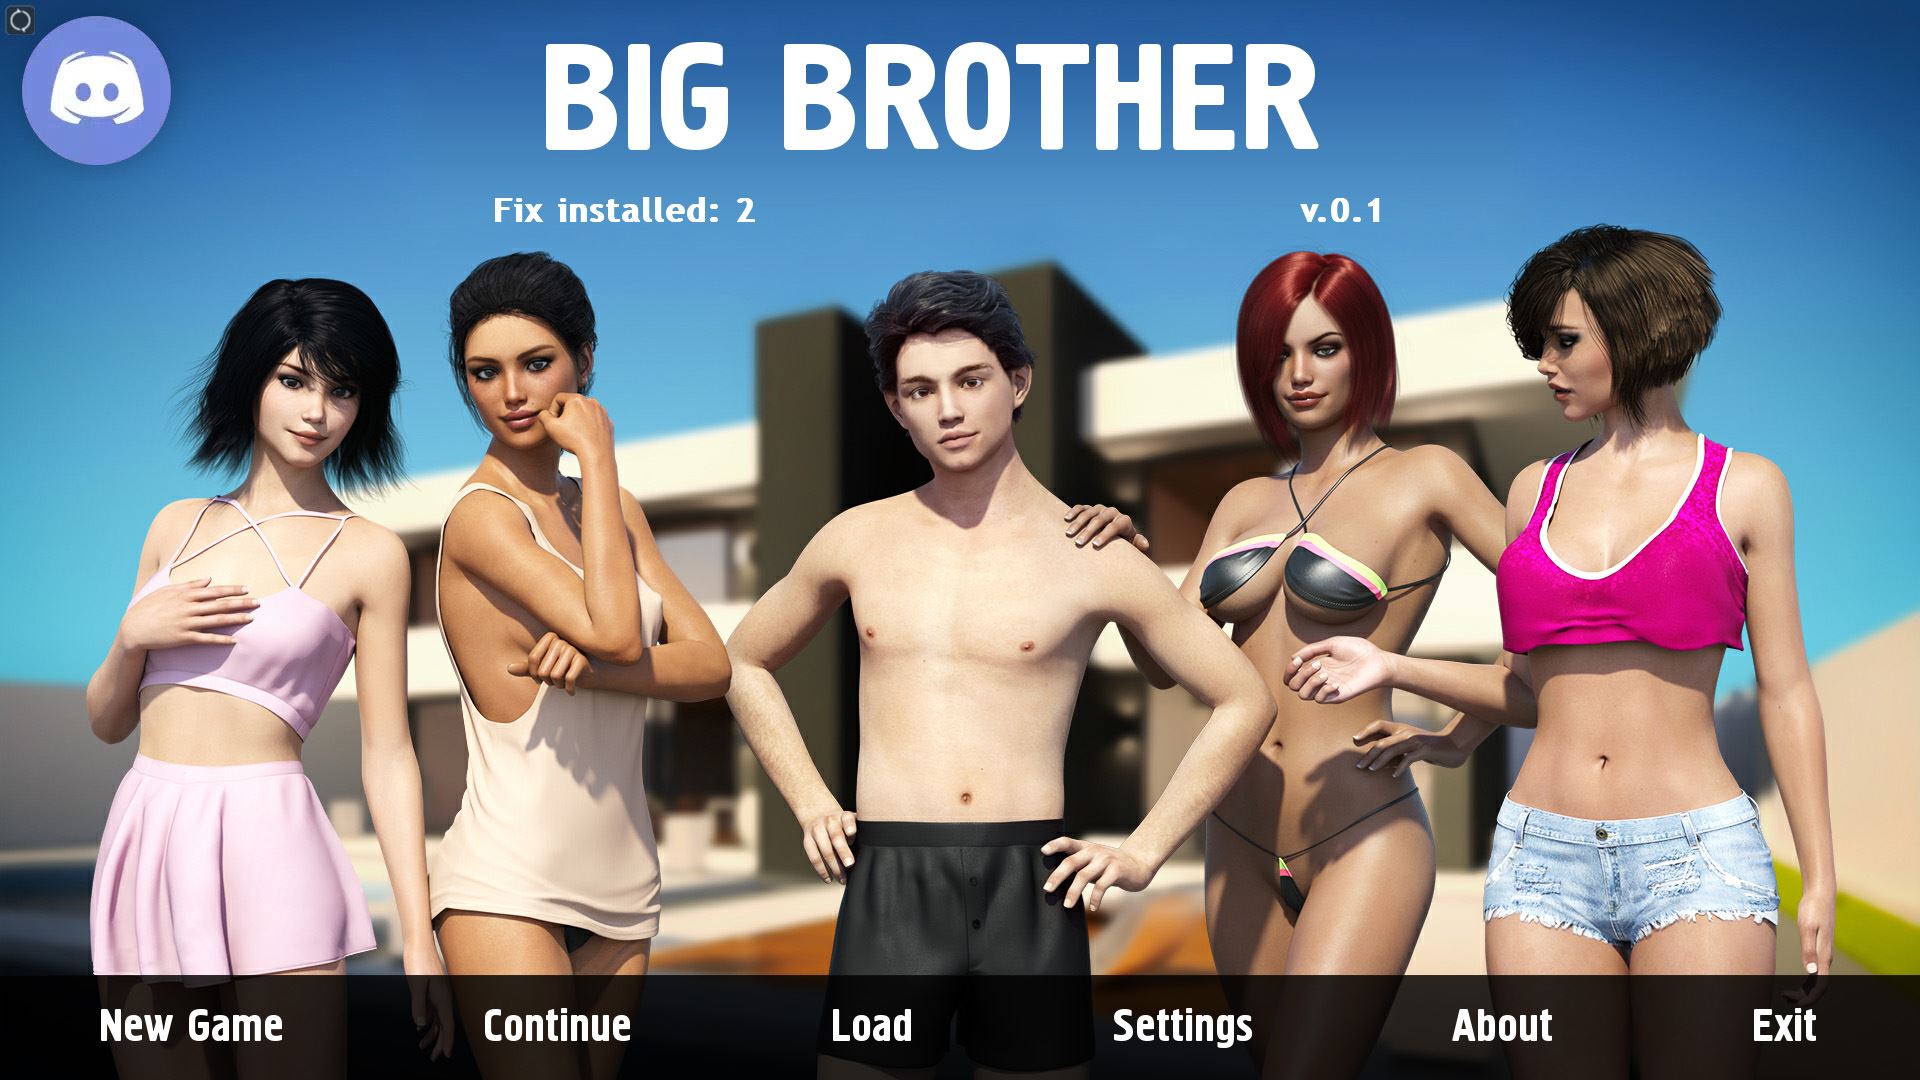 Sax Sax Sax Bif V - Big Brother: Ren'Py Remake Story Ren'Py Porn Sex Game v.1.02 - Fix 5  Download for Windows, MacOS, Linux, Android